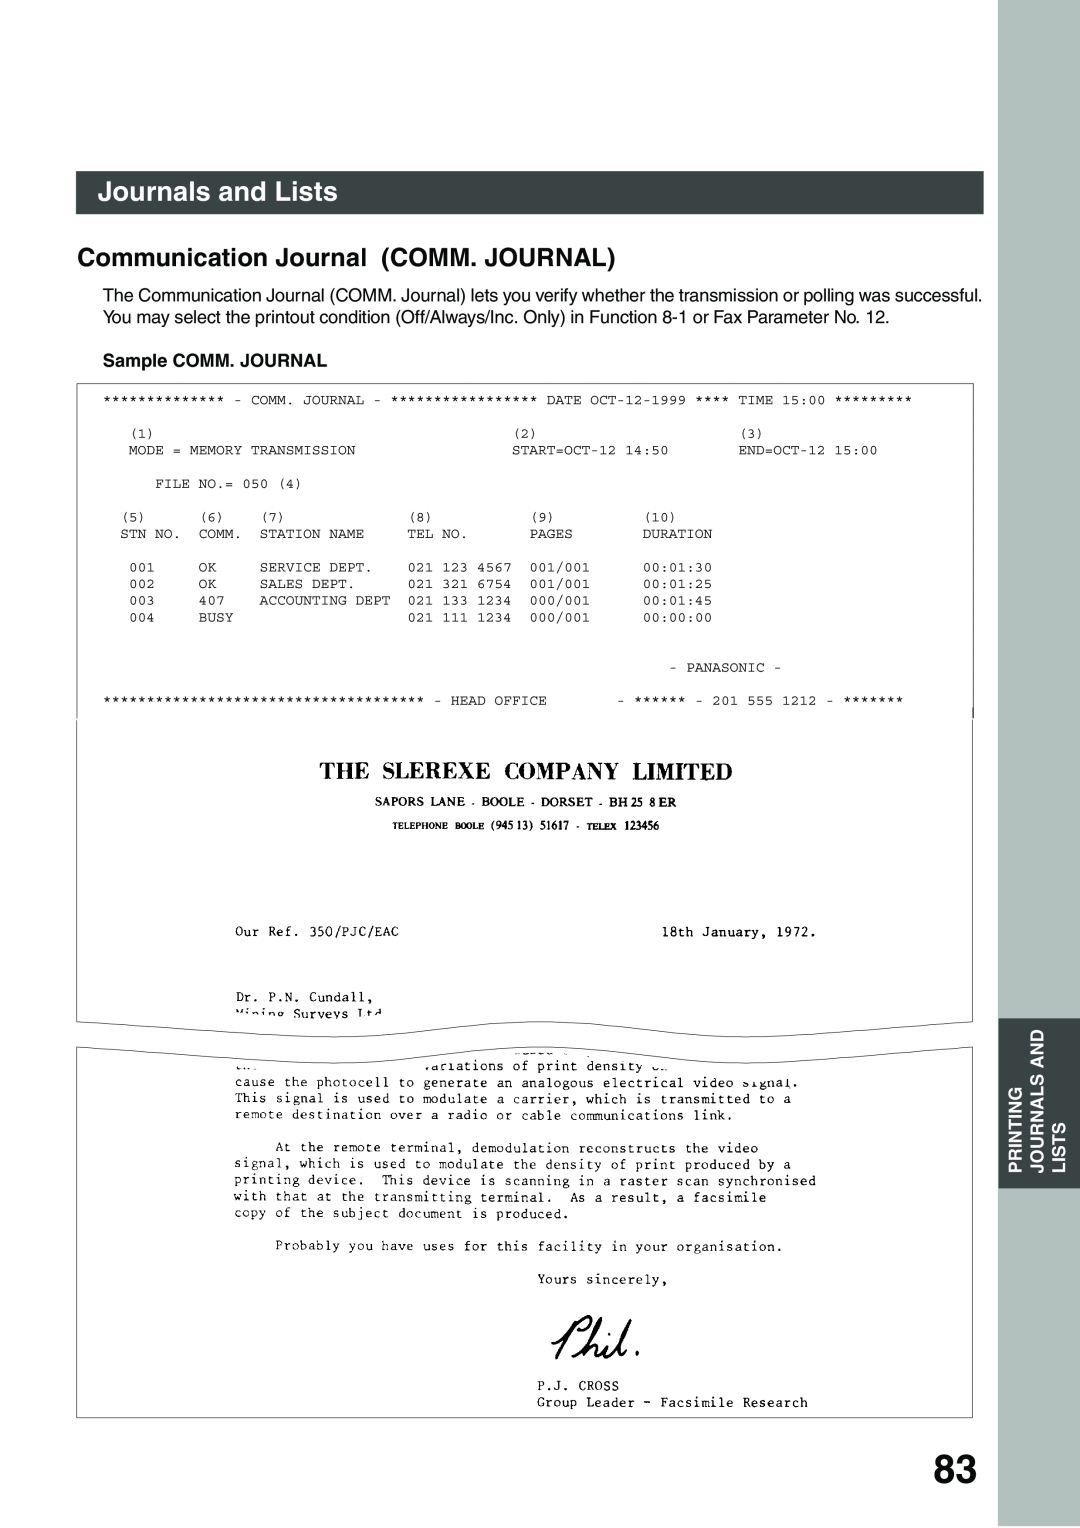 Panasonic DP-135FP appendix Journals and Lists, Communication Journal COMM. JOURNAL, Sample COMM. JOURNAL 